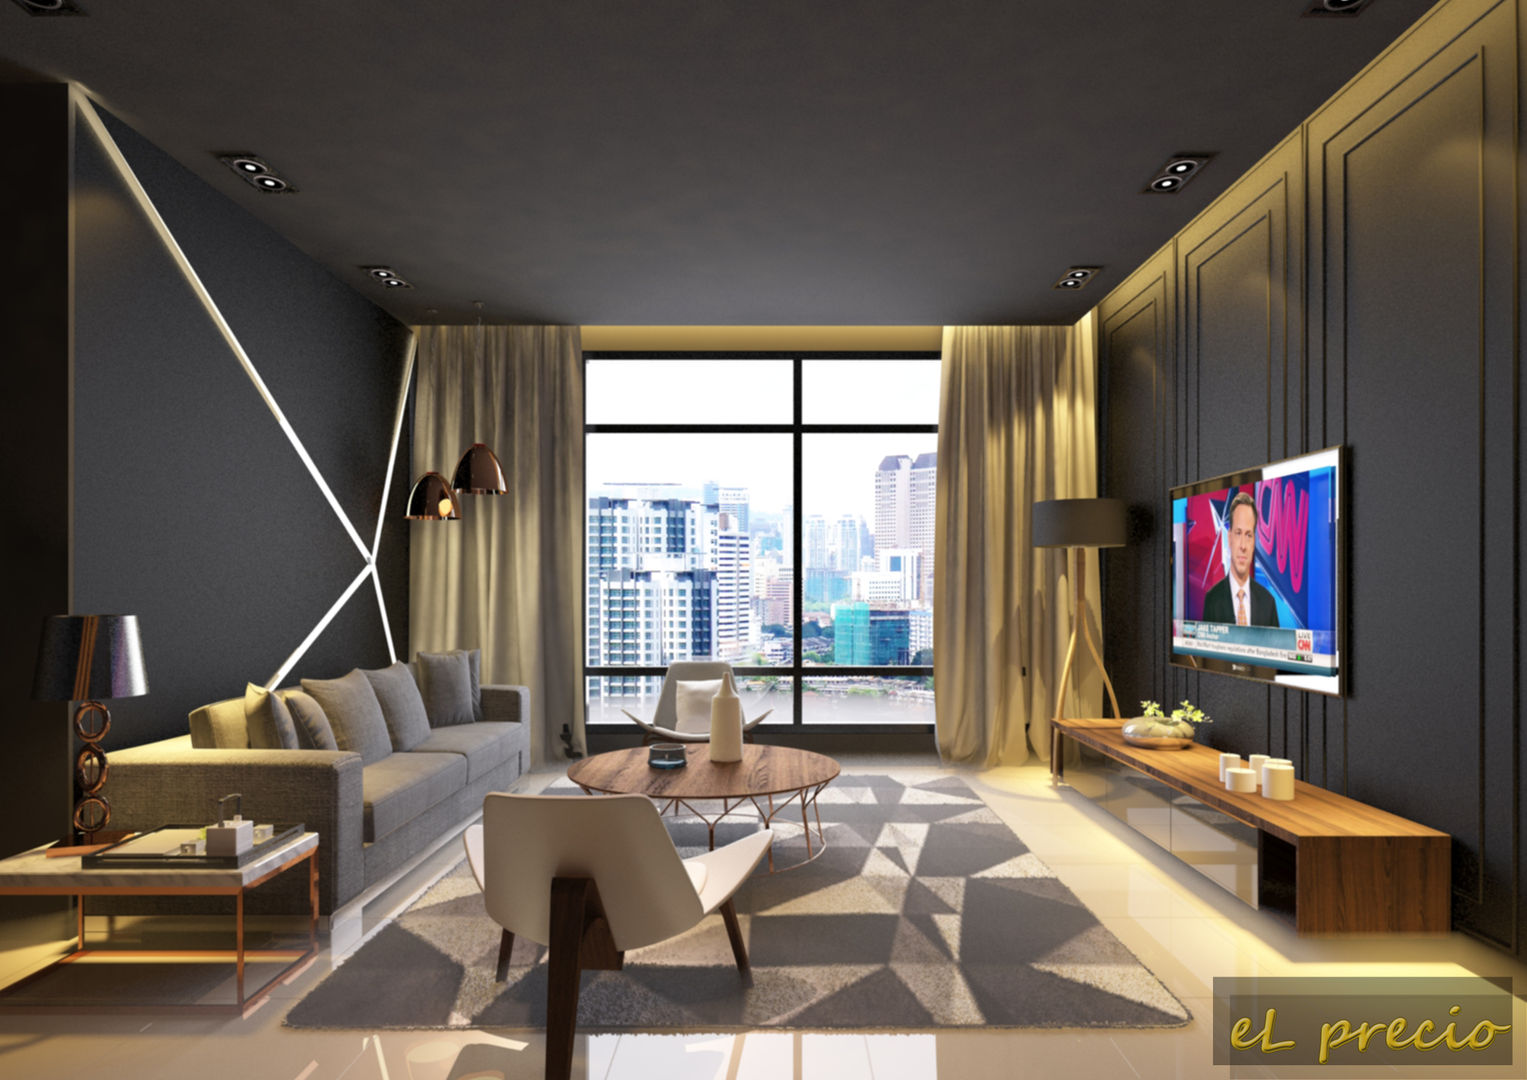 PROPOSED INTERIOR DESIGN FOR BANJARIA COURT APARTMENT AT BATU CAVES, SELANGOR eL precio Tropical style living room